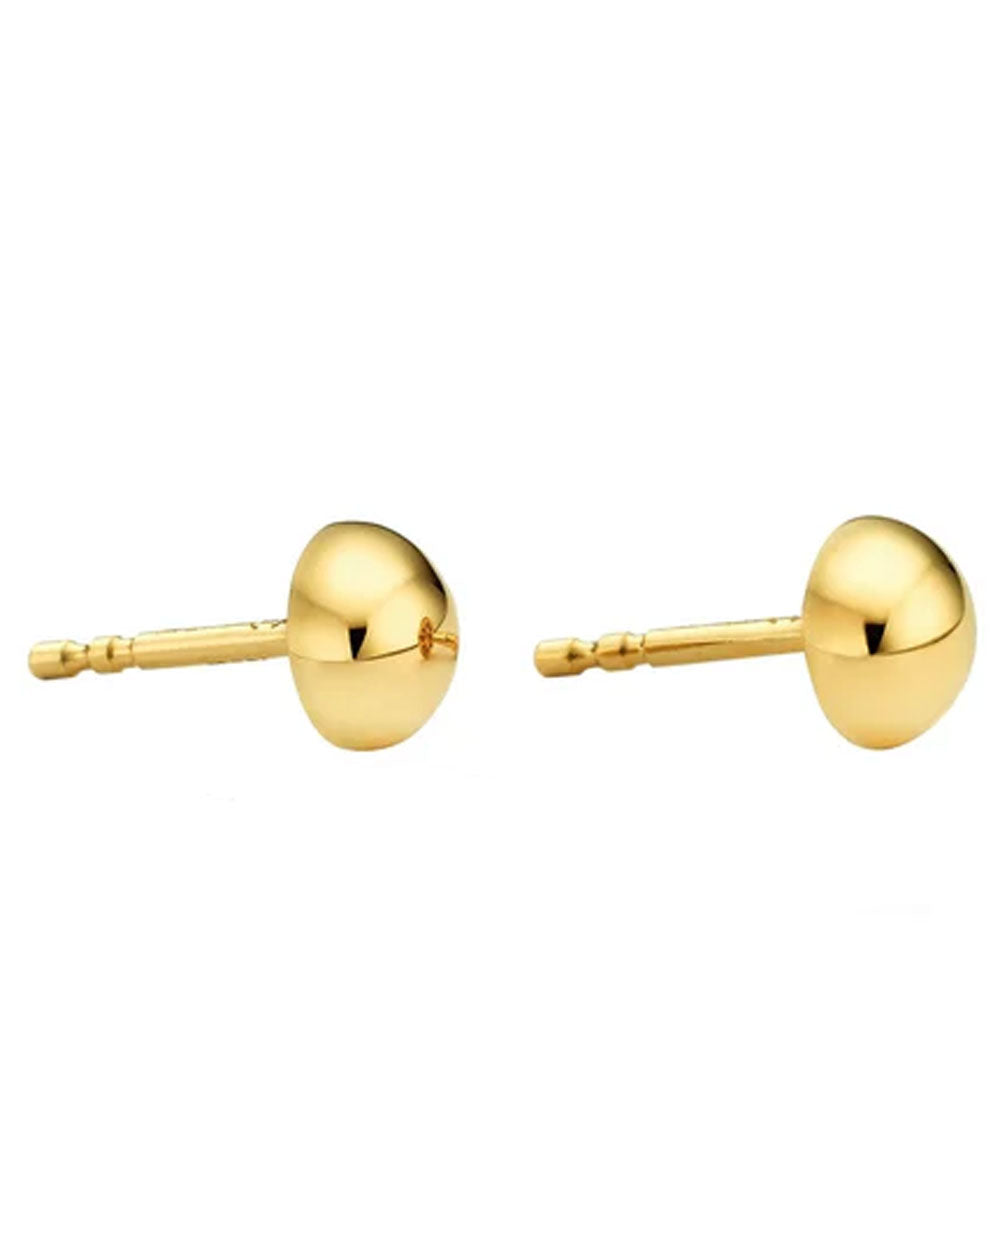 Small Gold Stud Earrings #6